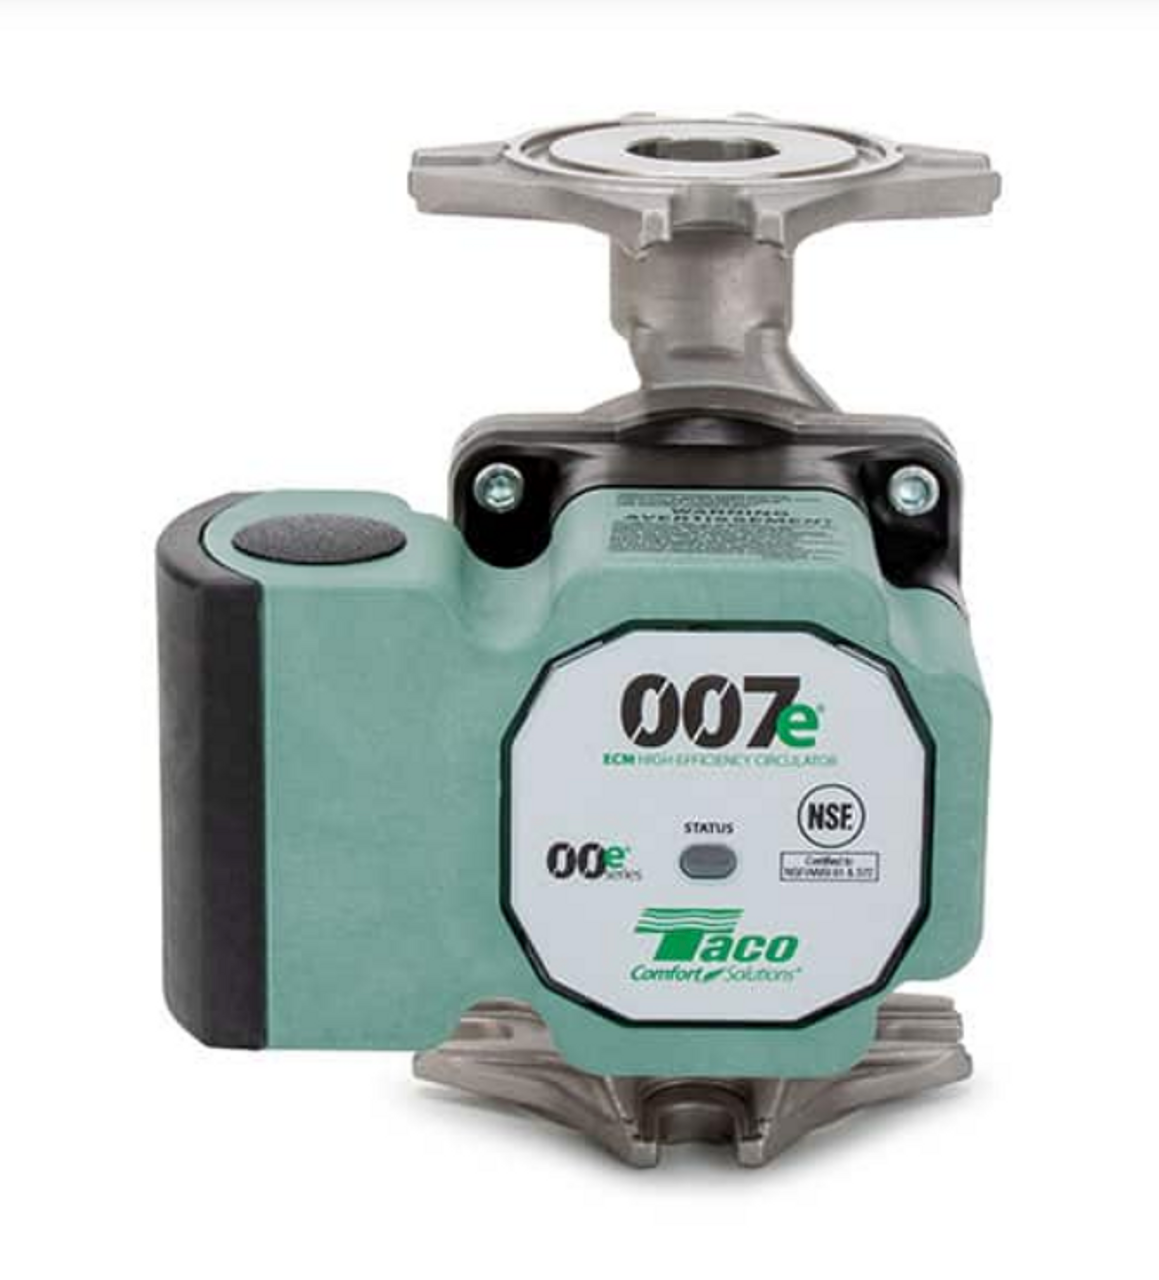 007e-SF4 Taco Stainless Steel Ecm High Efficiency Circulator National Pump  Supply